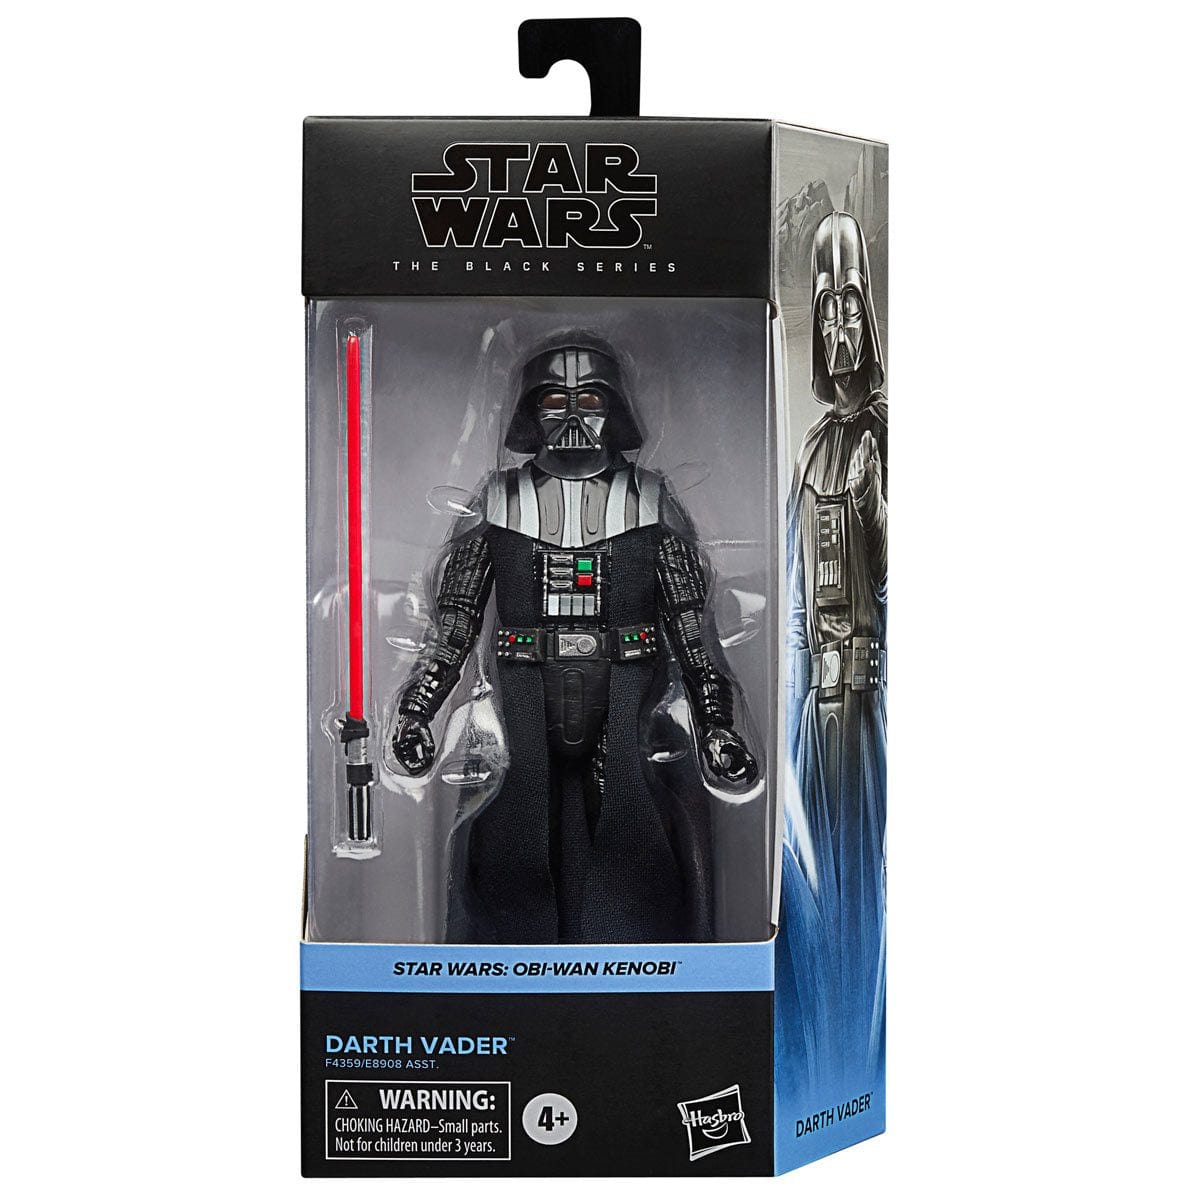 Star Wars The Black Series Darth Vader 6-Inch Action Figure - Pop-O-Loco - Hasbro